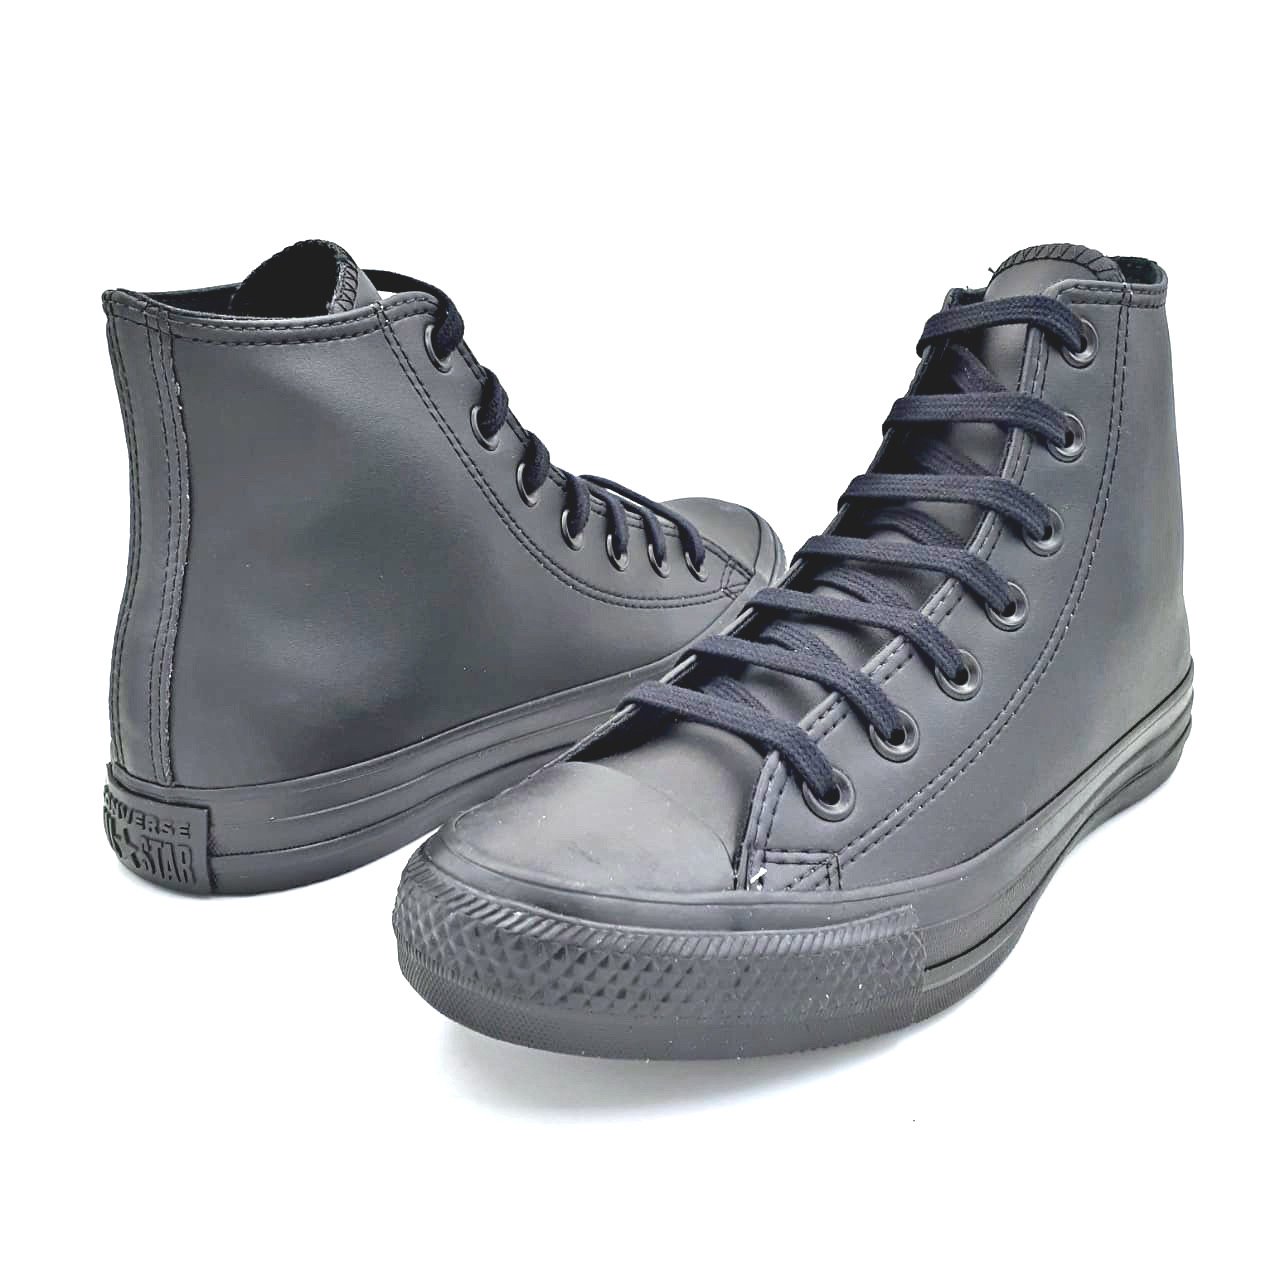 Converse All Star Preto Tachas Prata Vintage sapatos unissex